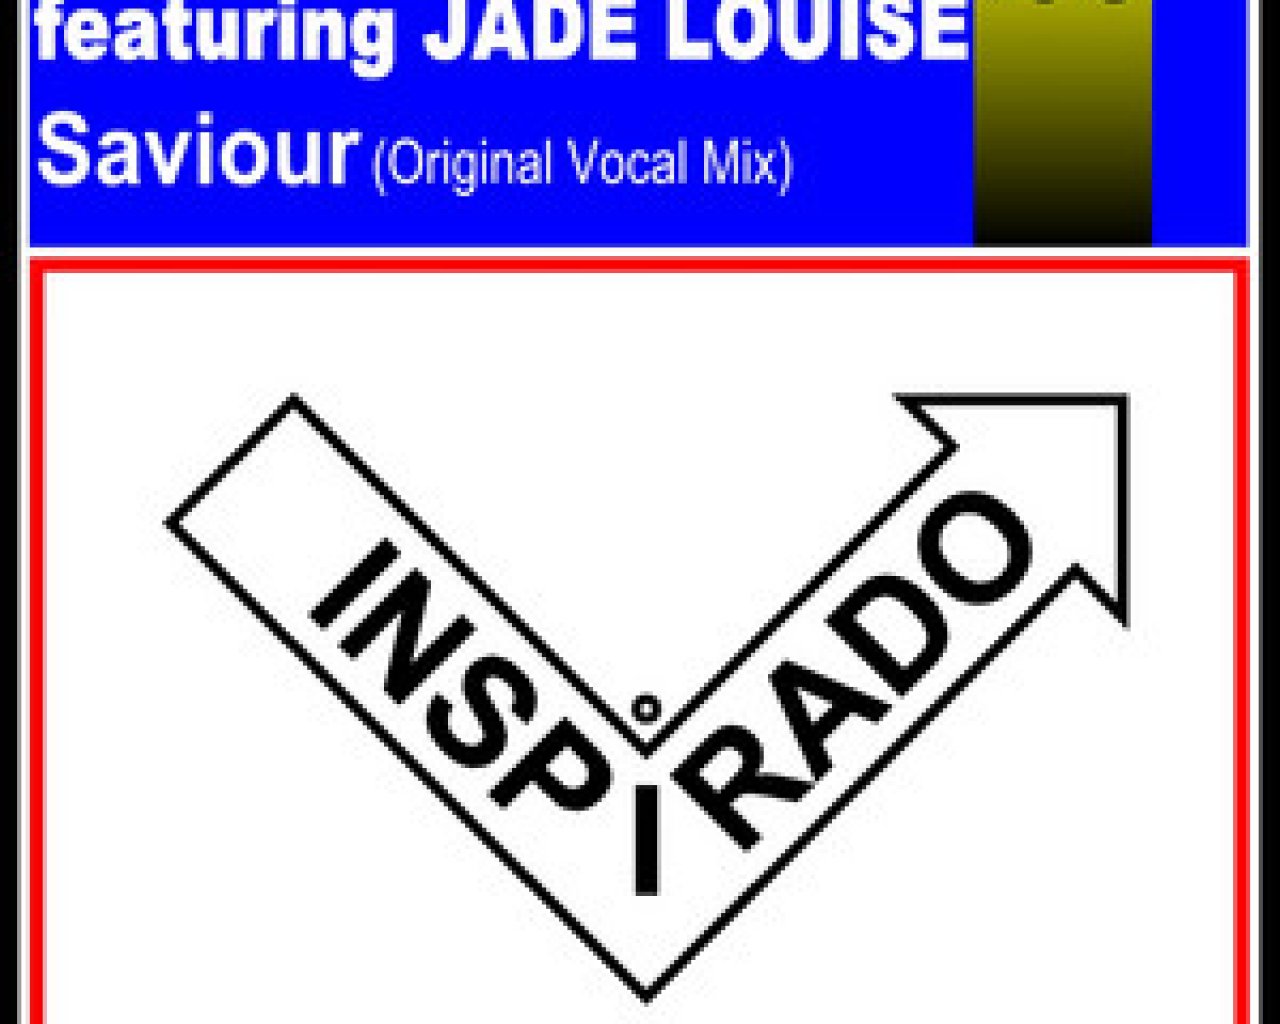 Jade Louise